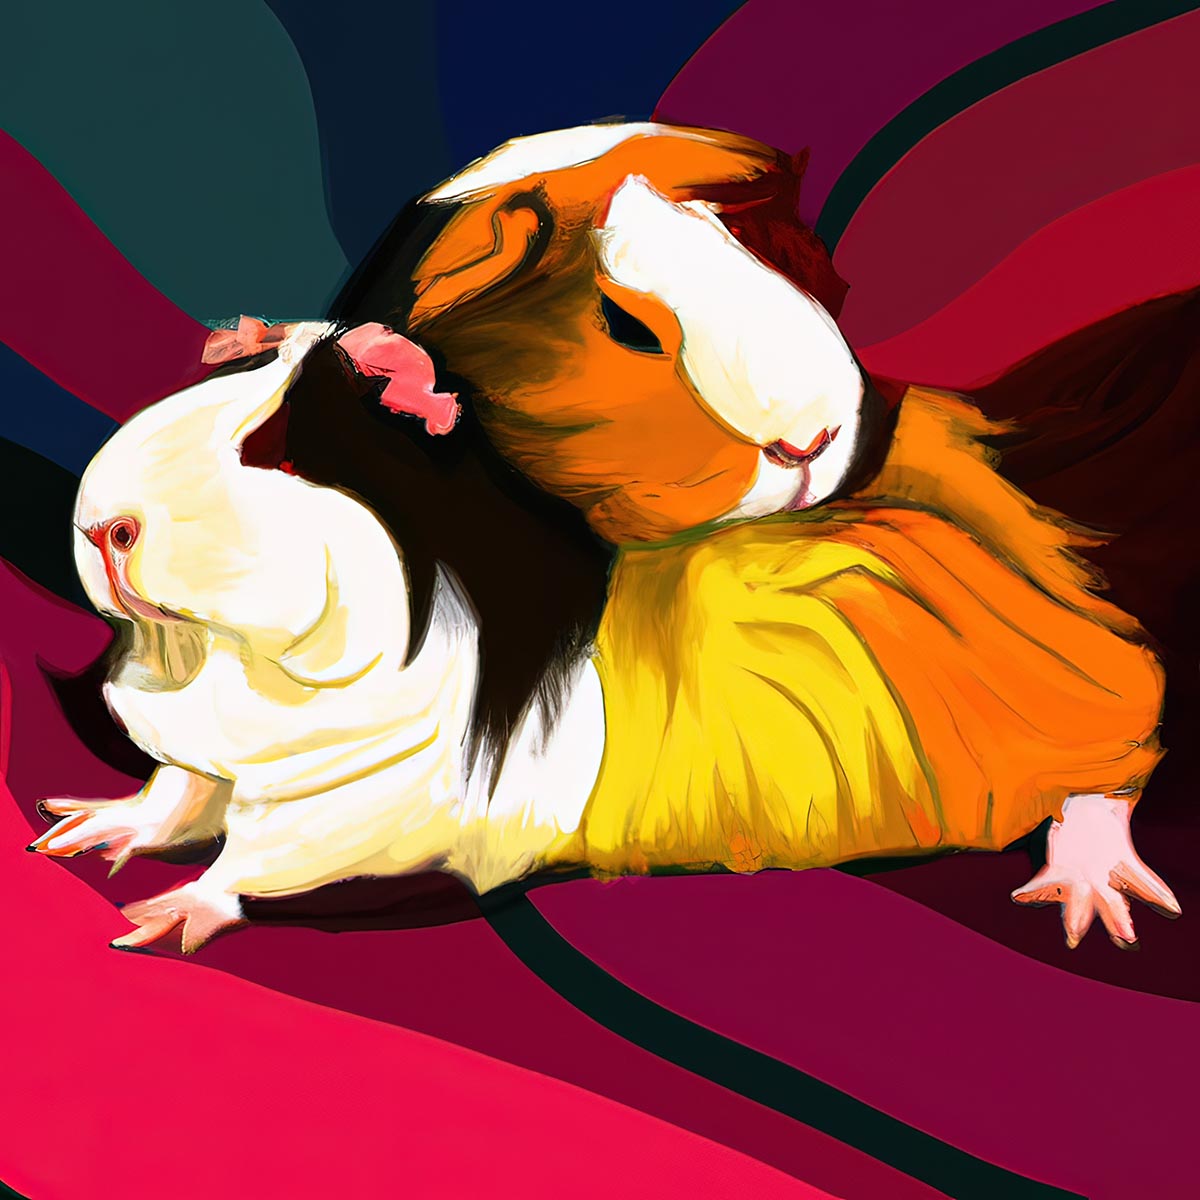 Guinea pig Illustration from CavyArt